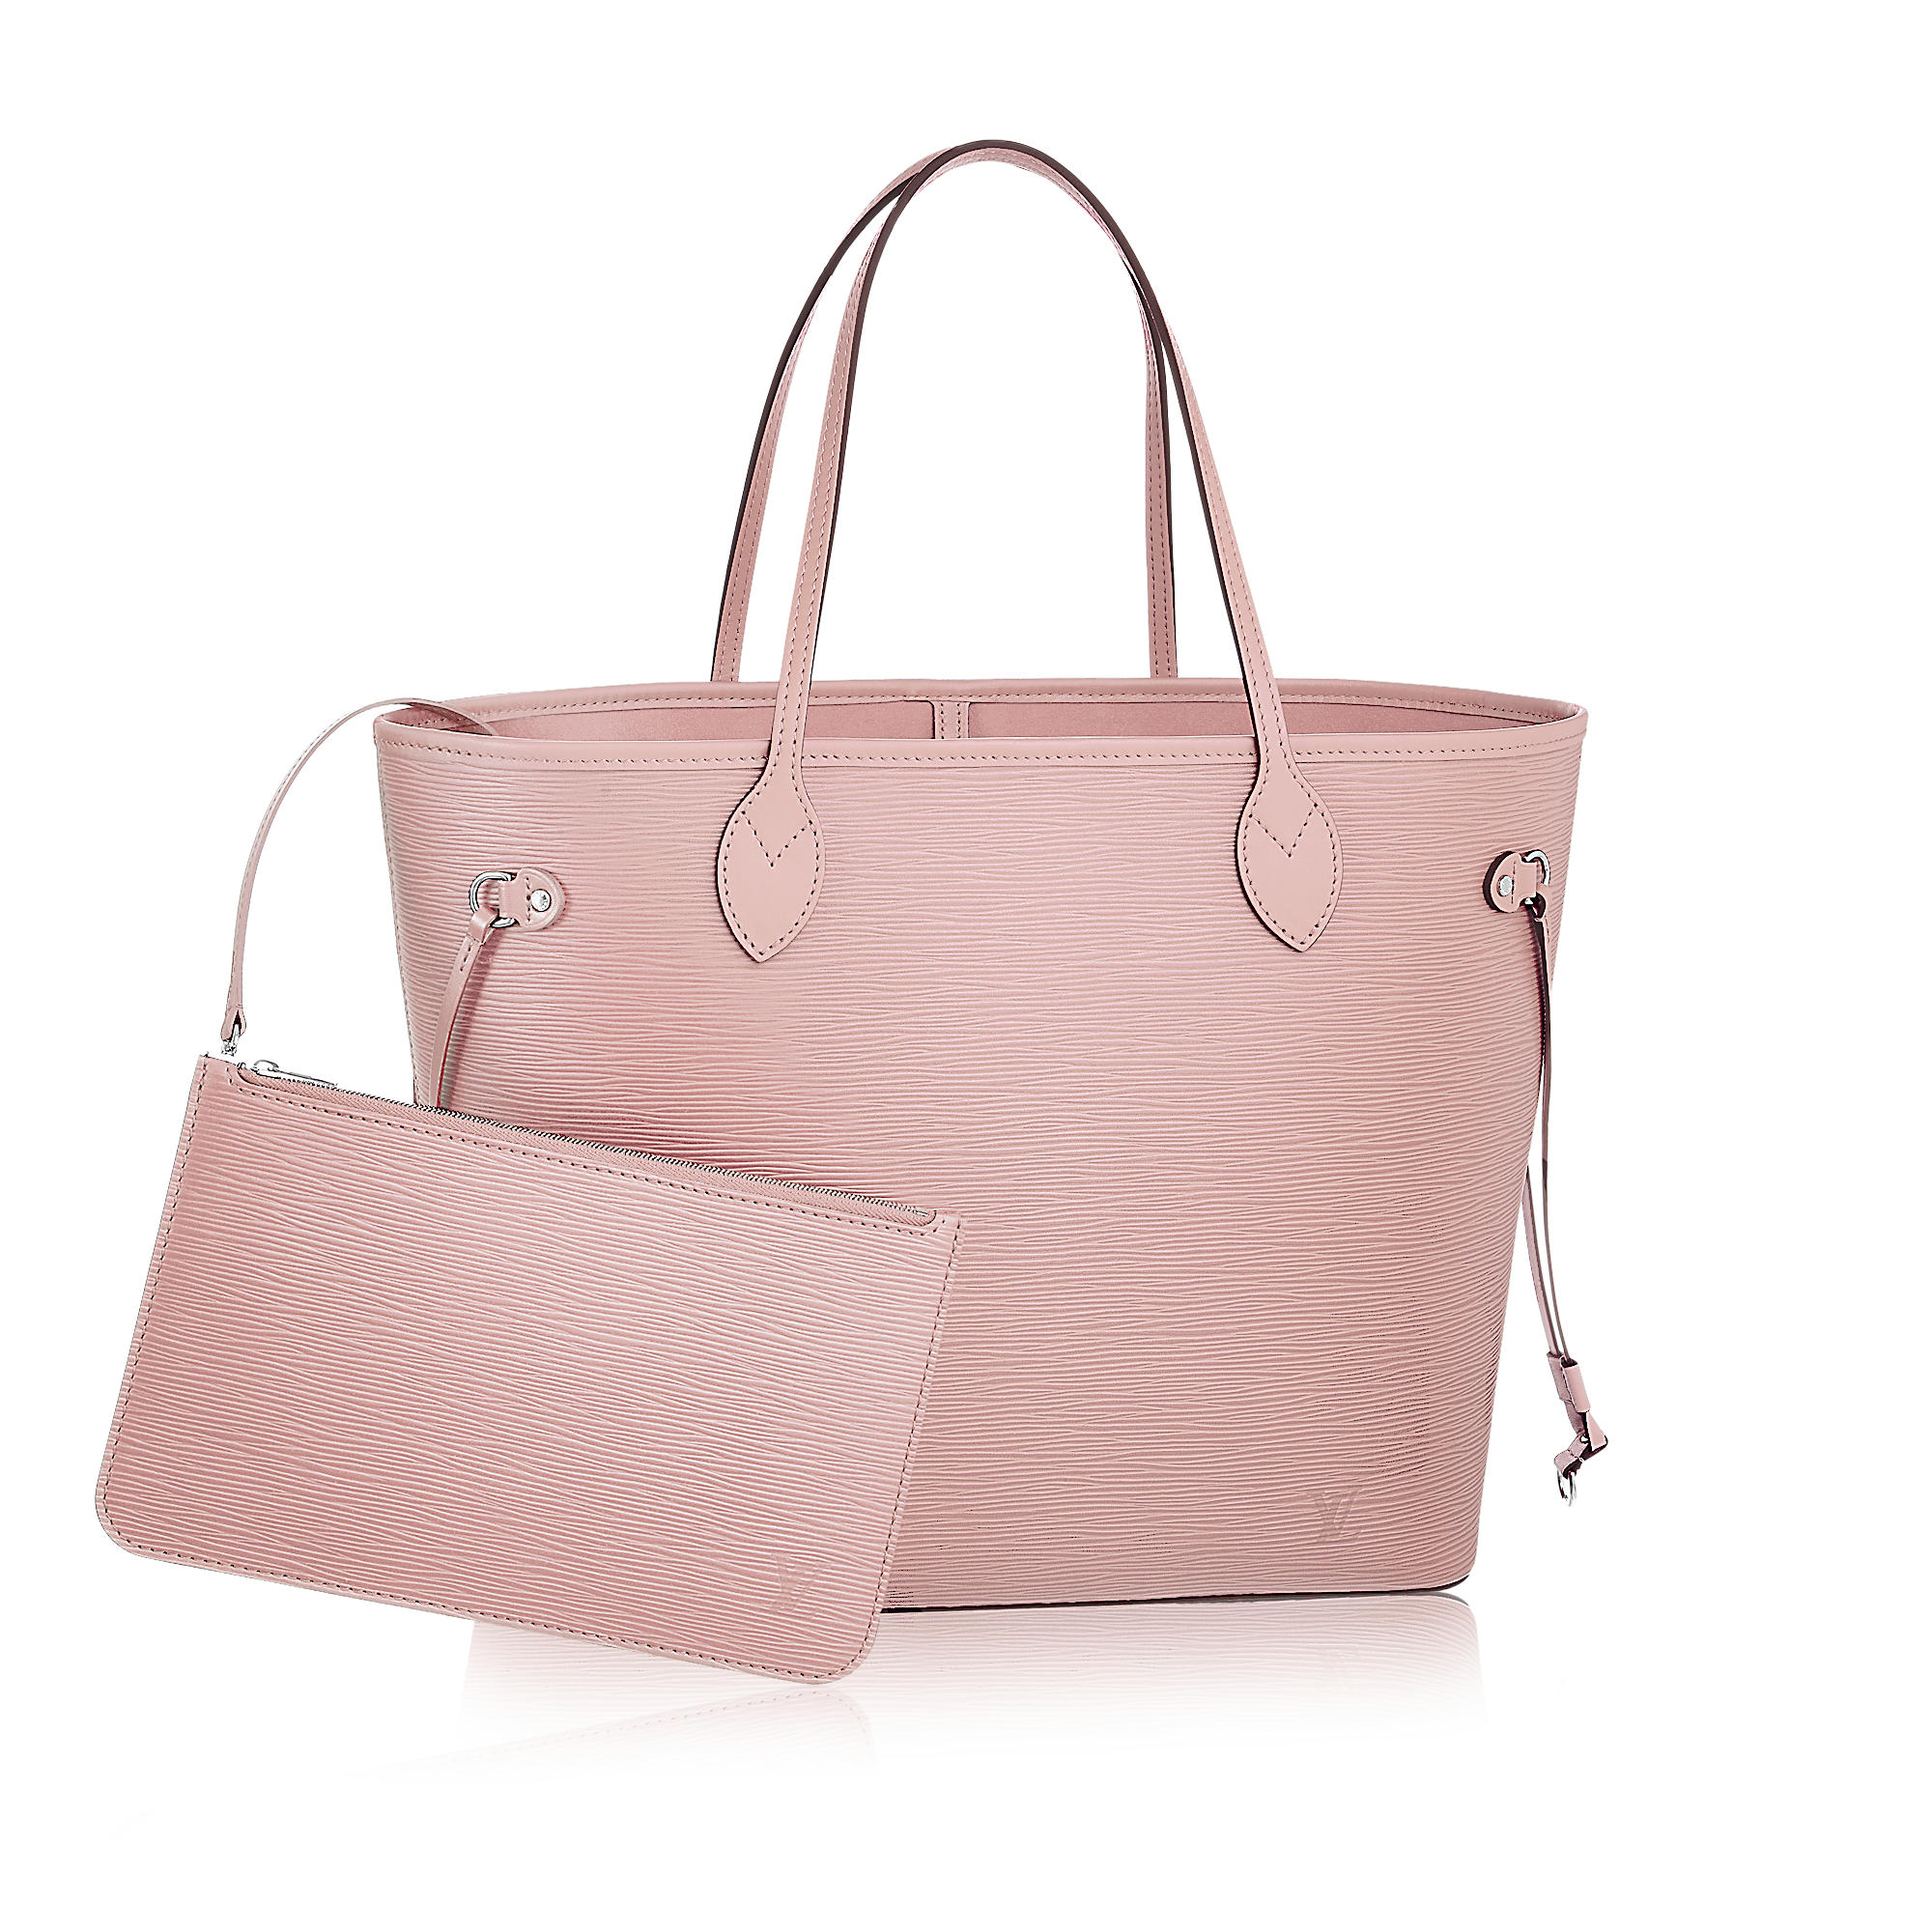 Osnove shoppinga: Kako prepoznati lažnu Louis Vuitton torbu? 